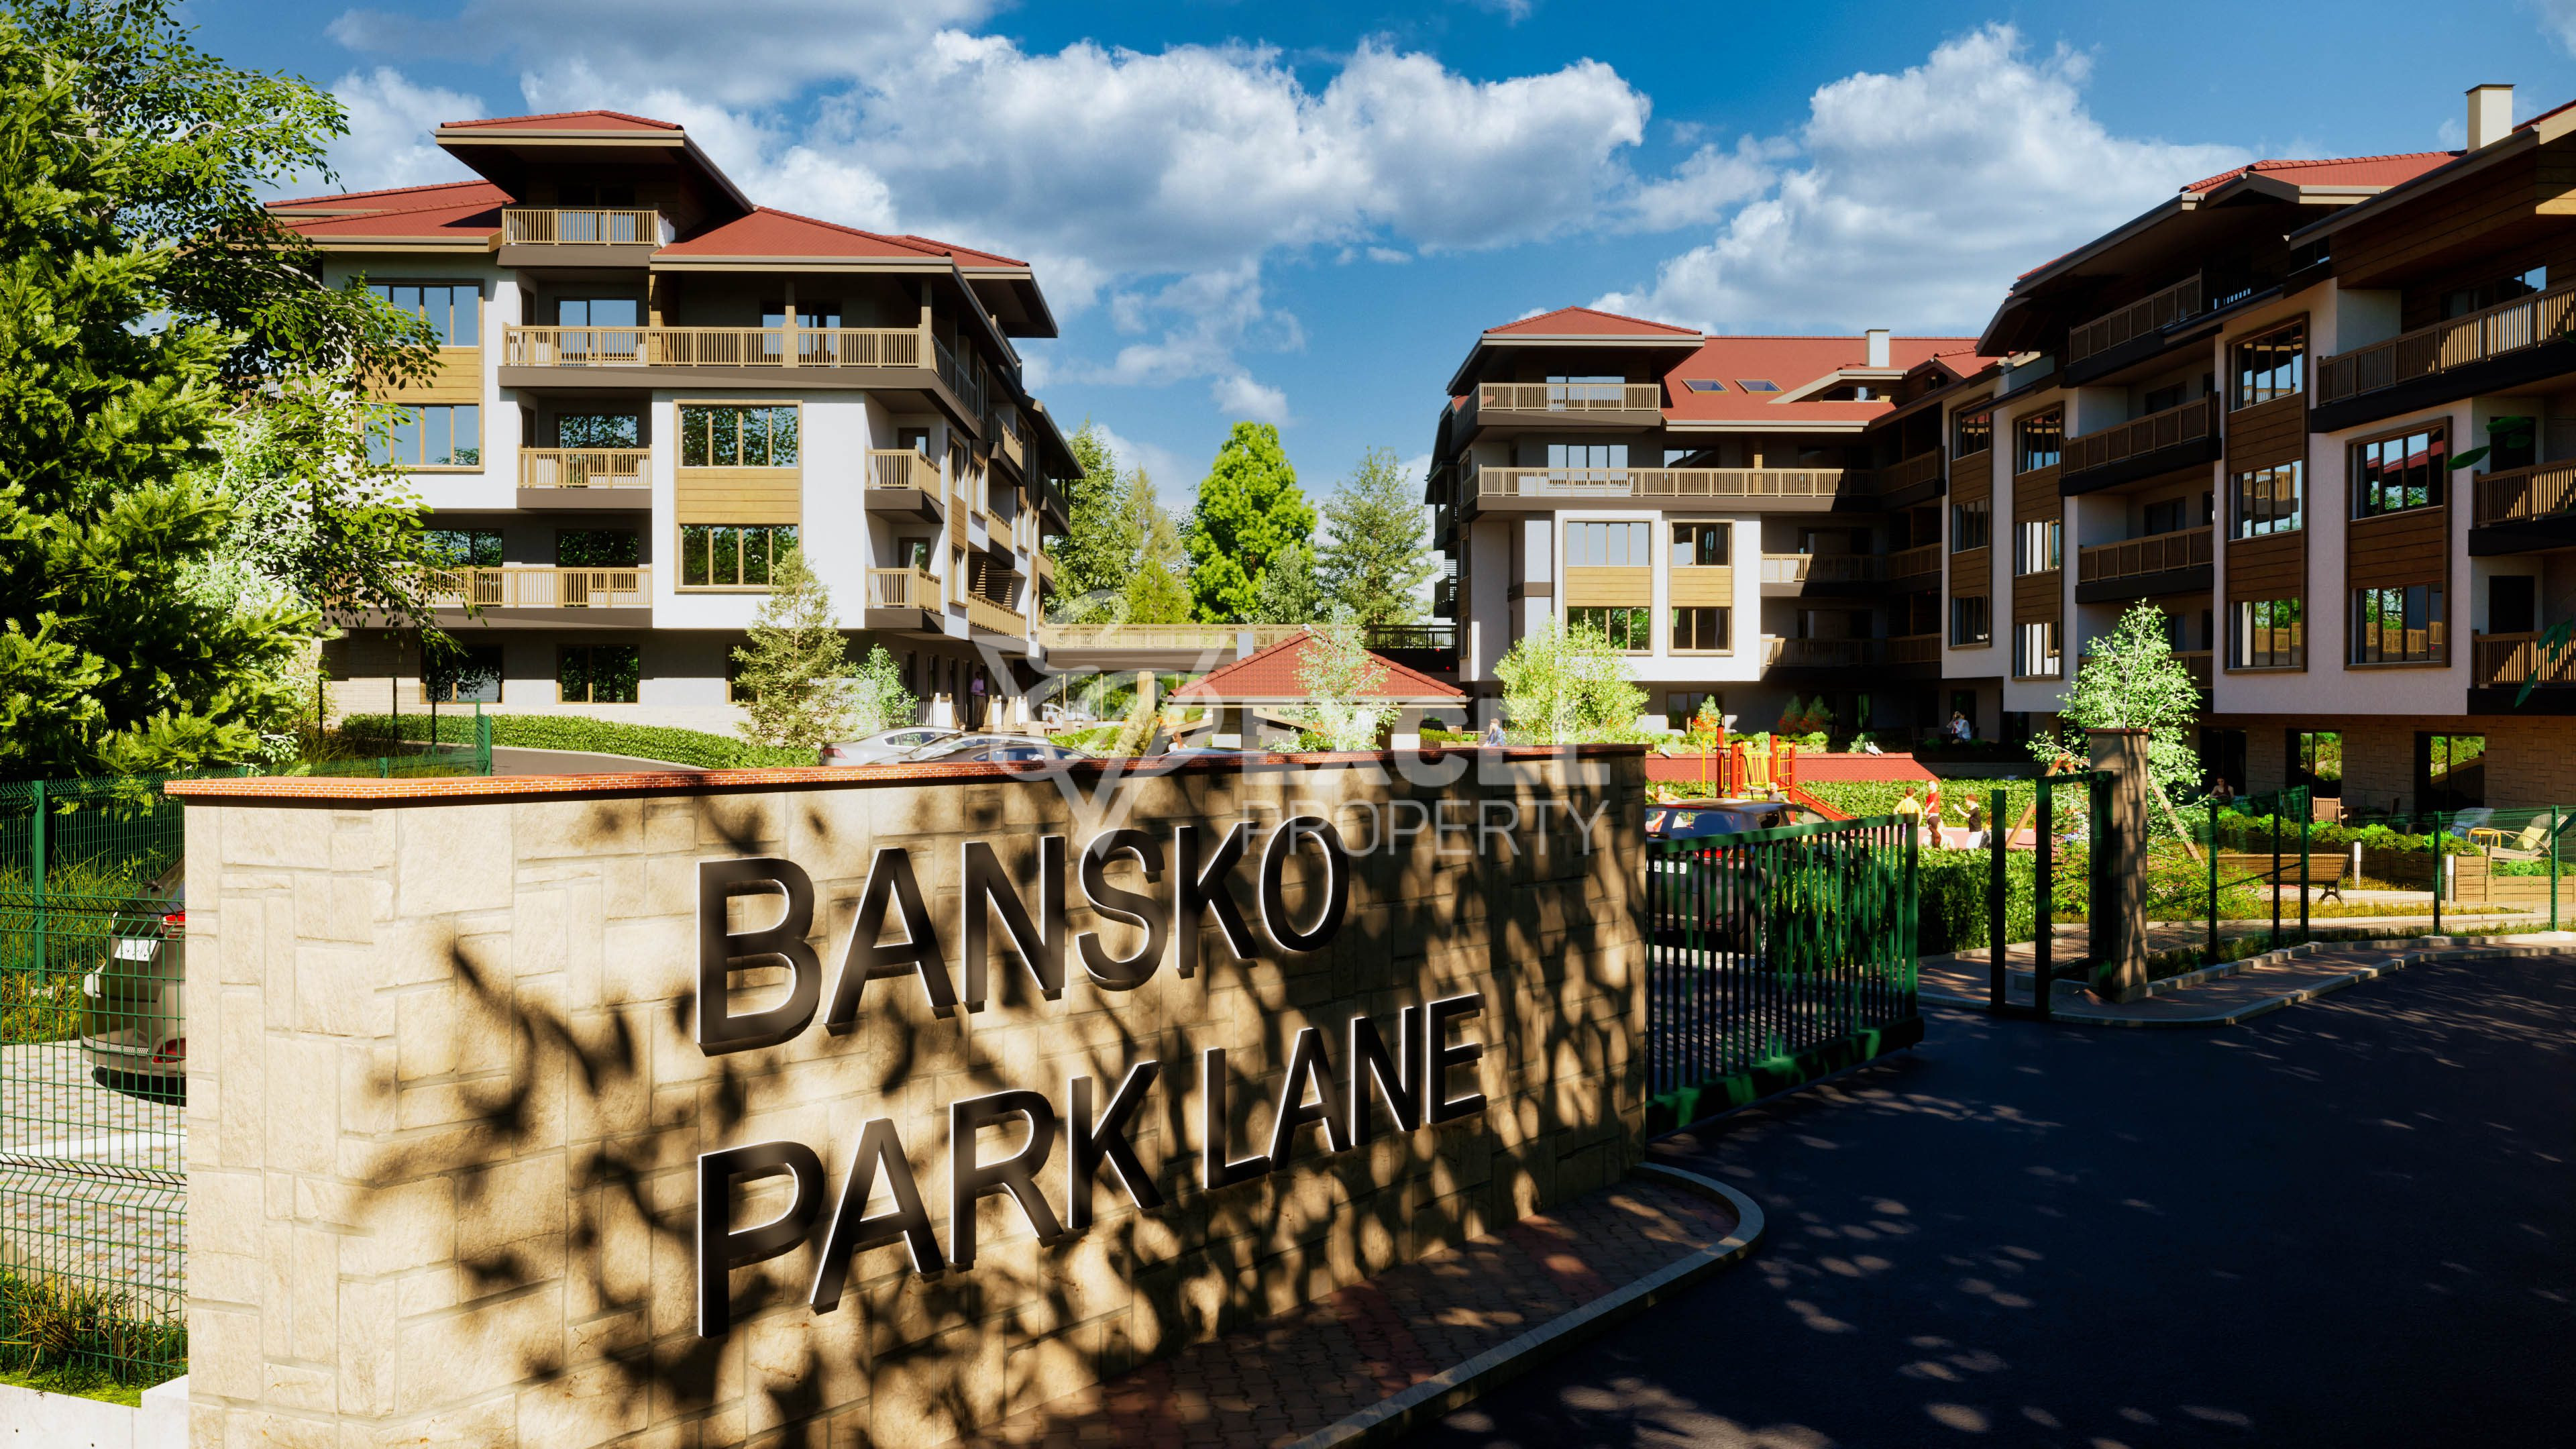 "Park Land" new residential complex in Bansko